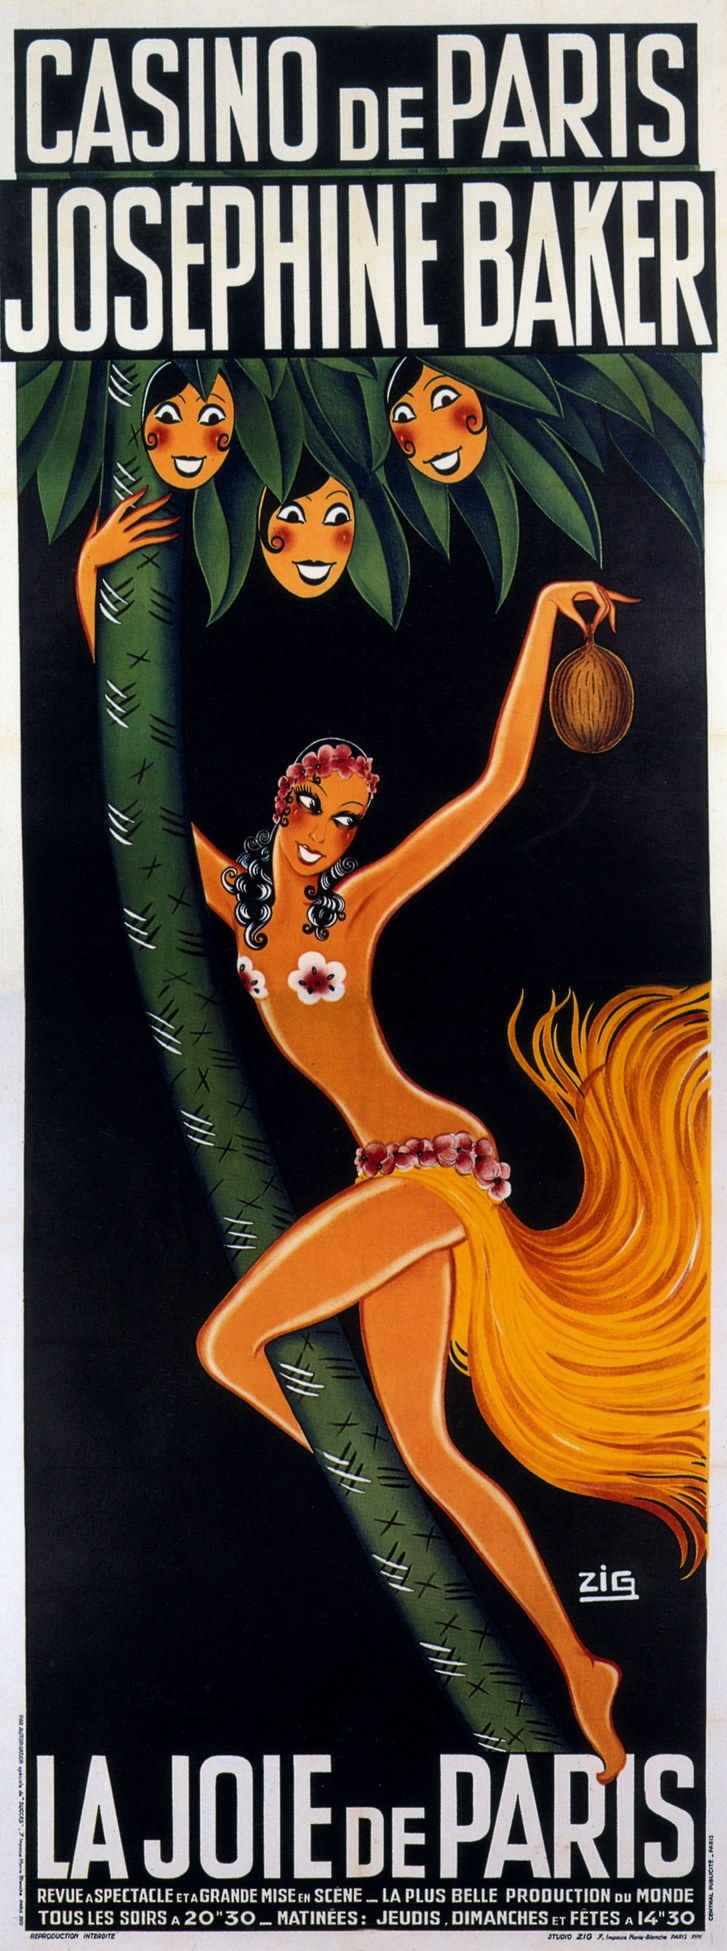 Plakat von Zig für Show La Joie de Paris mit Josephine Baker 1930